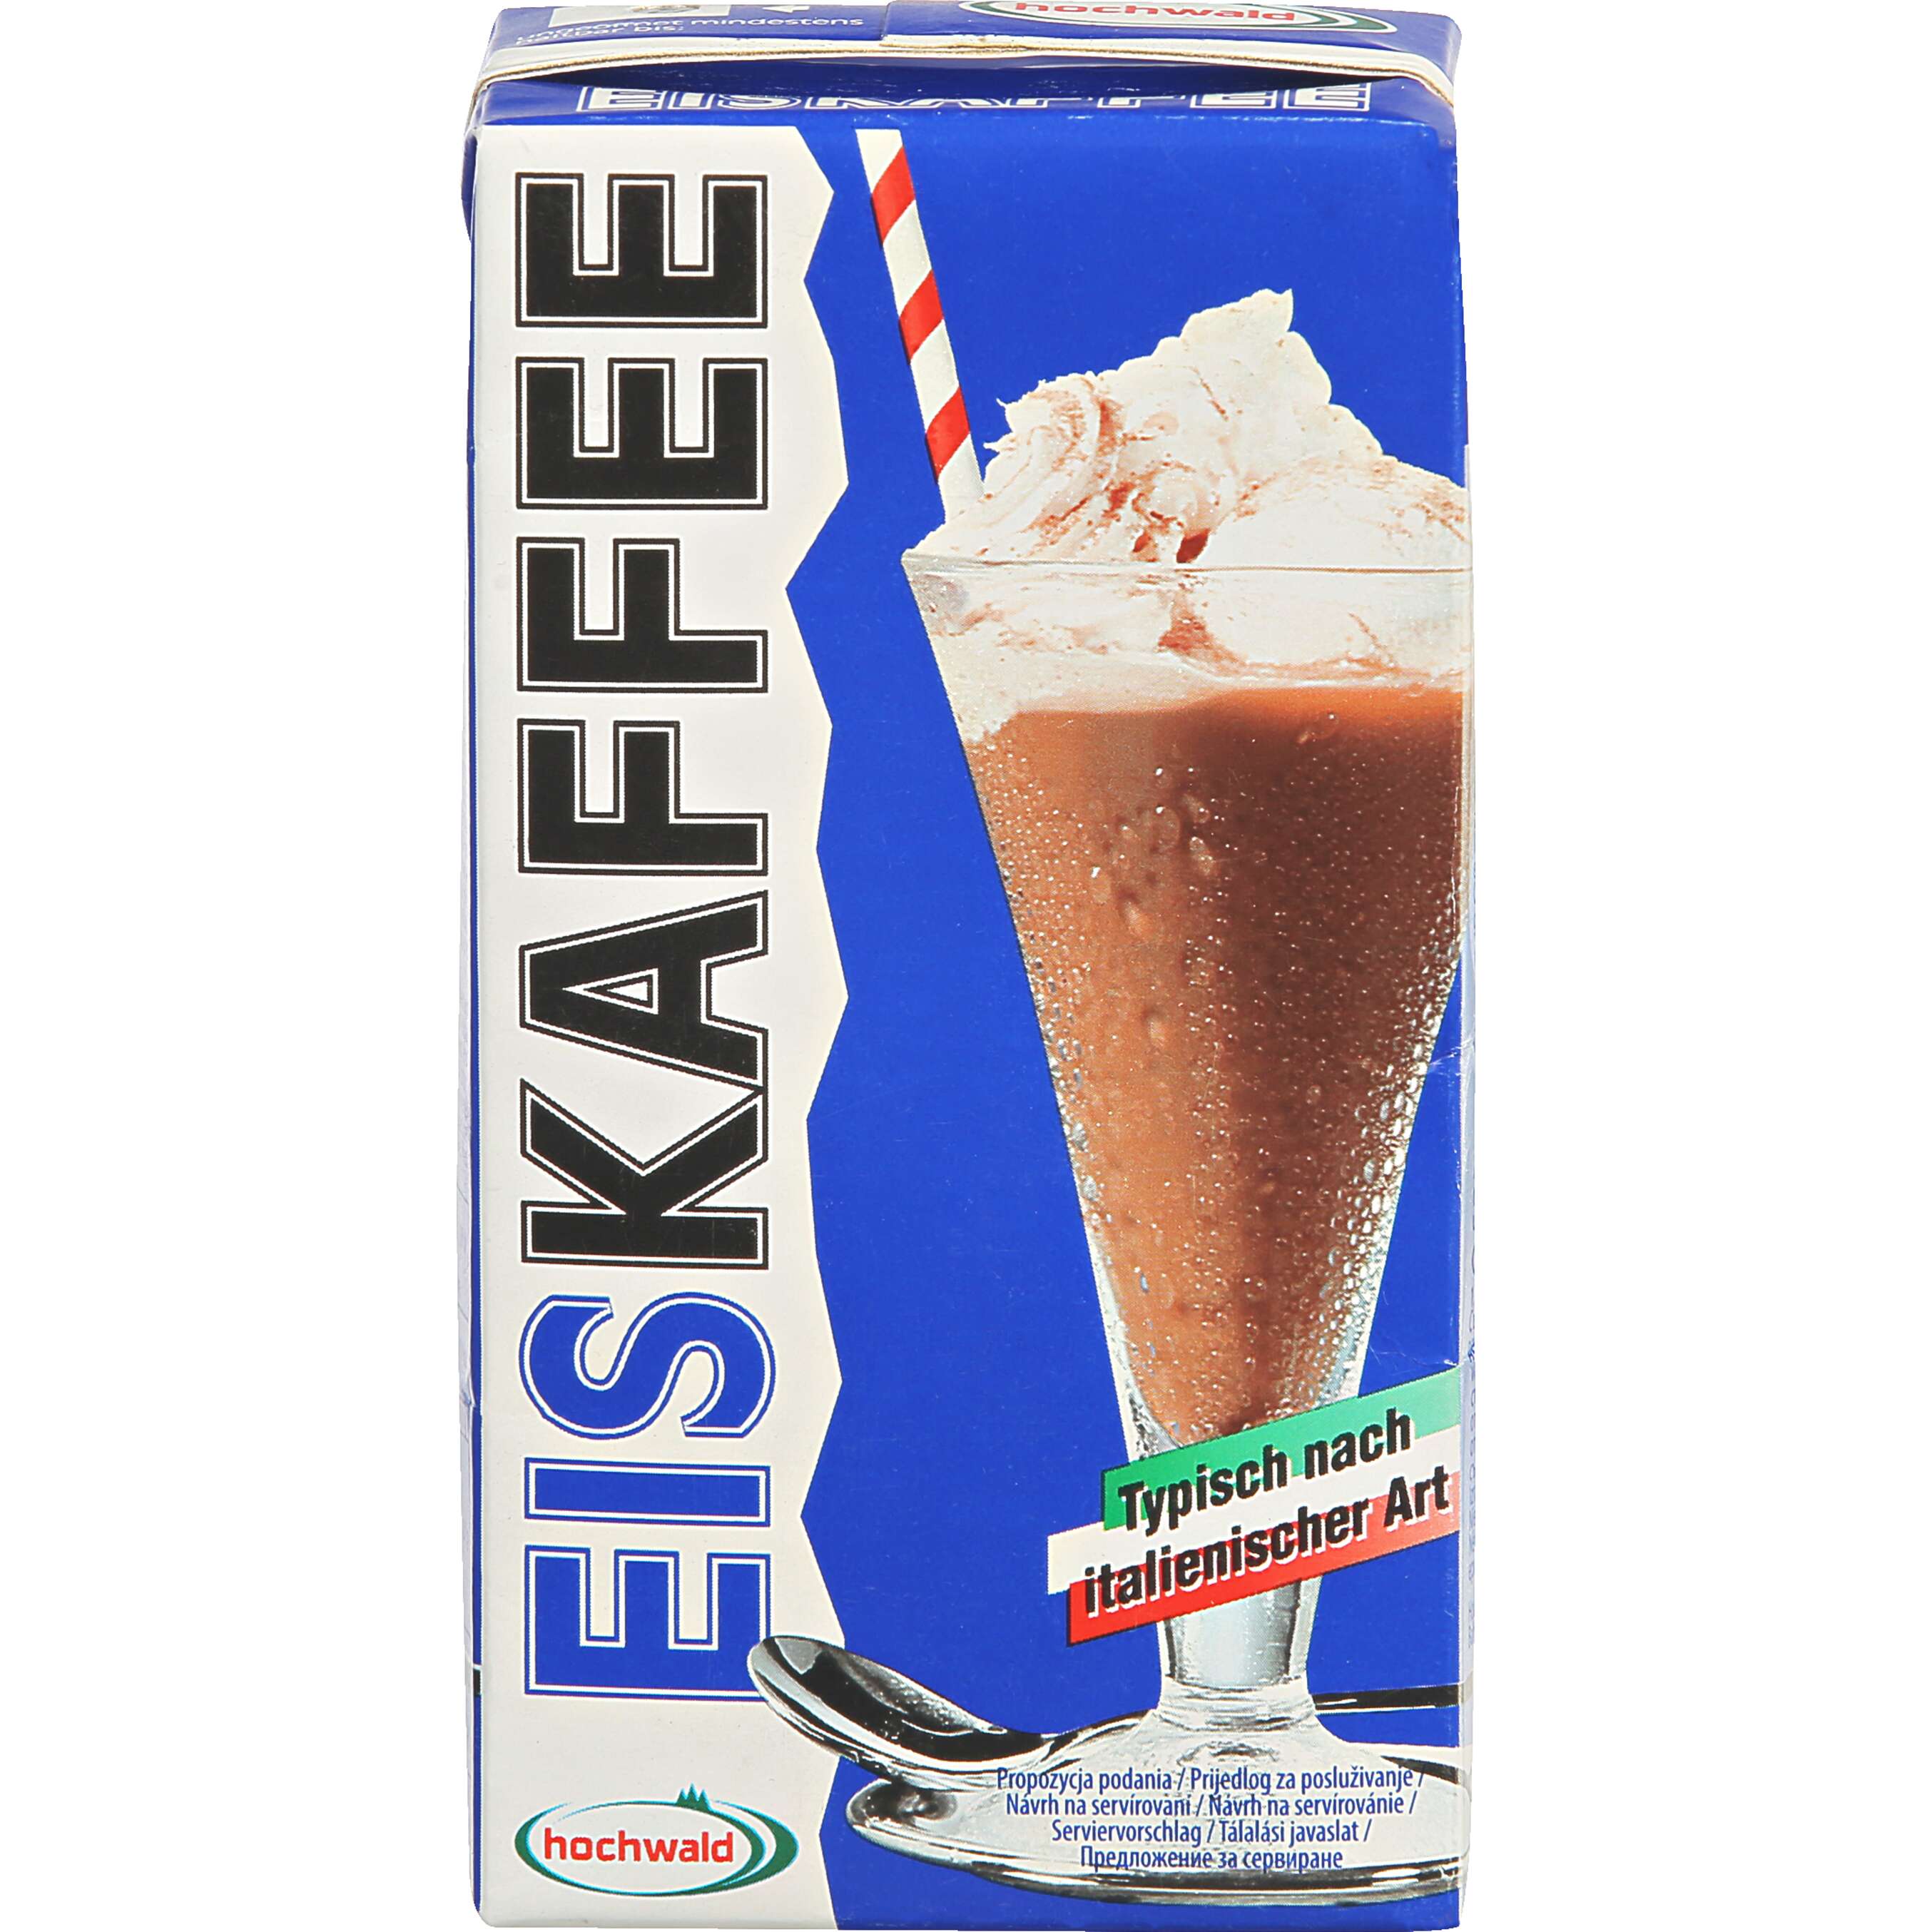 Zobrazit nabídku Eiskaffee/Eiskaffee Light Mléčný nápoj